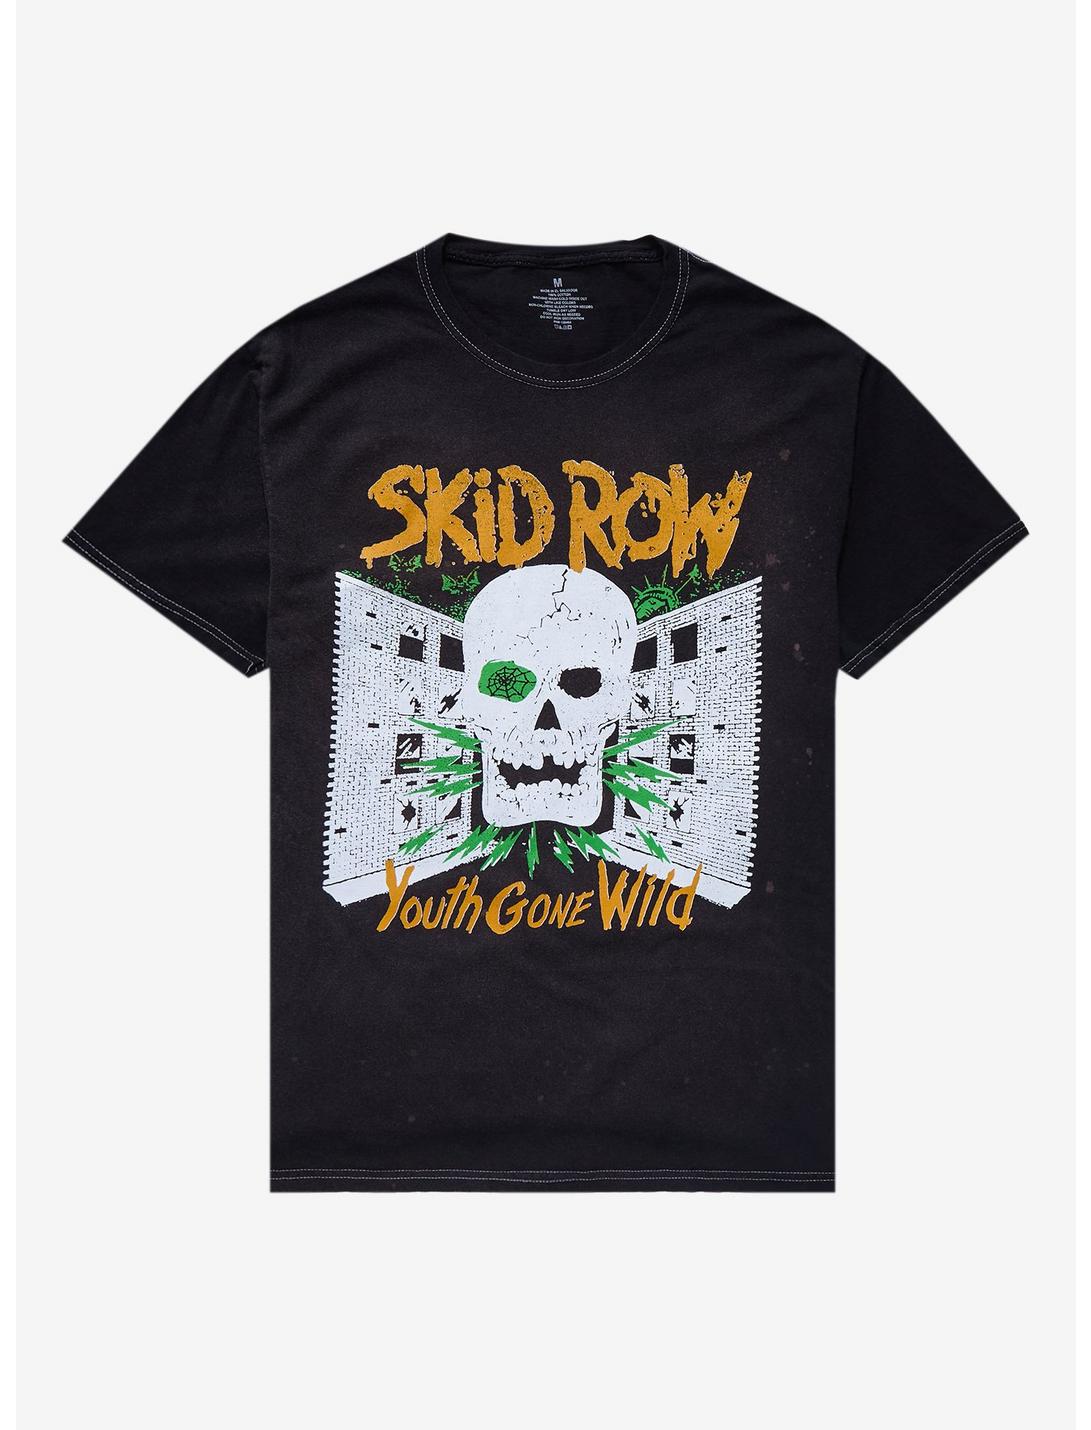 Skid Row Youth Gone Wild Skull T-Shirt, BLACK, hi-res